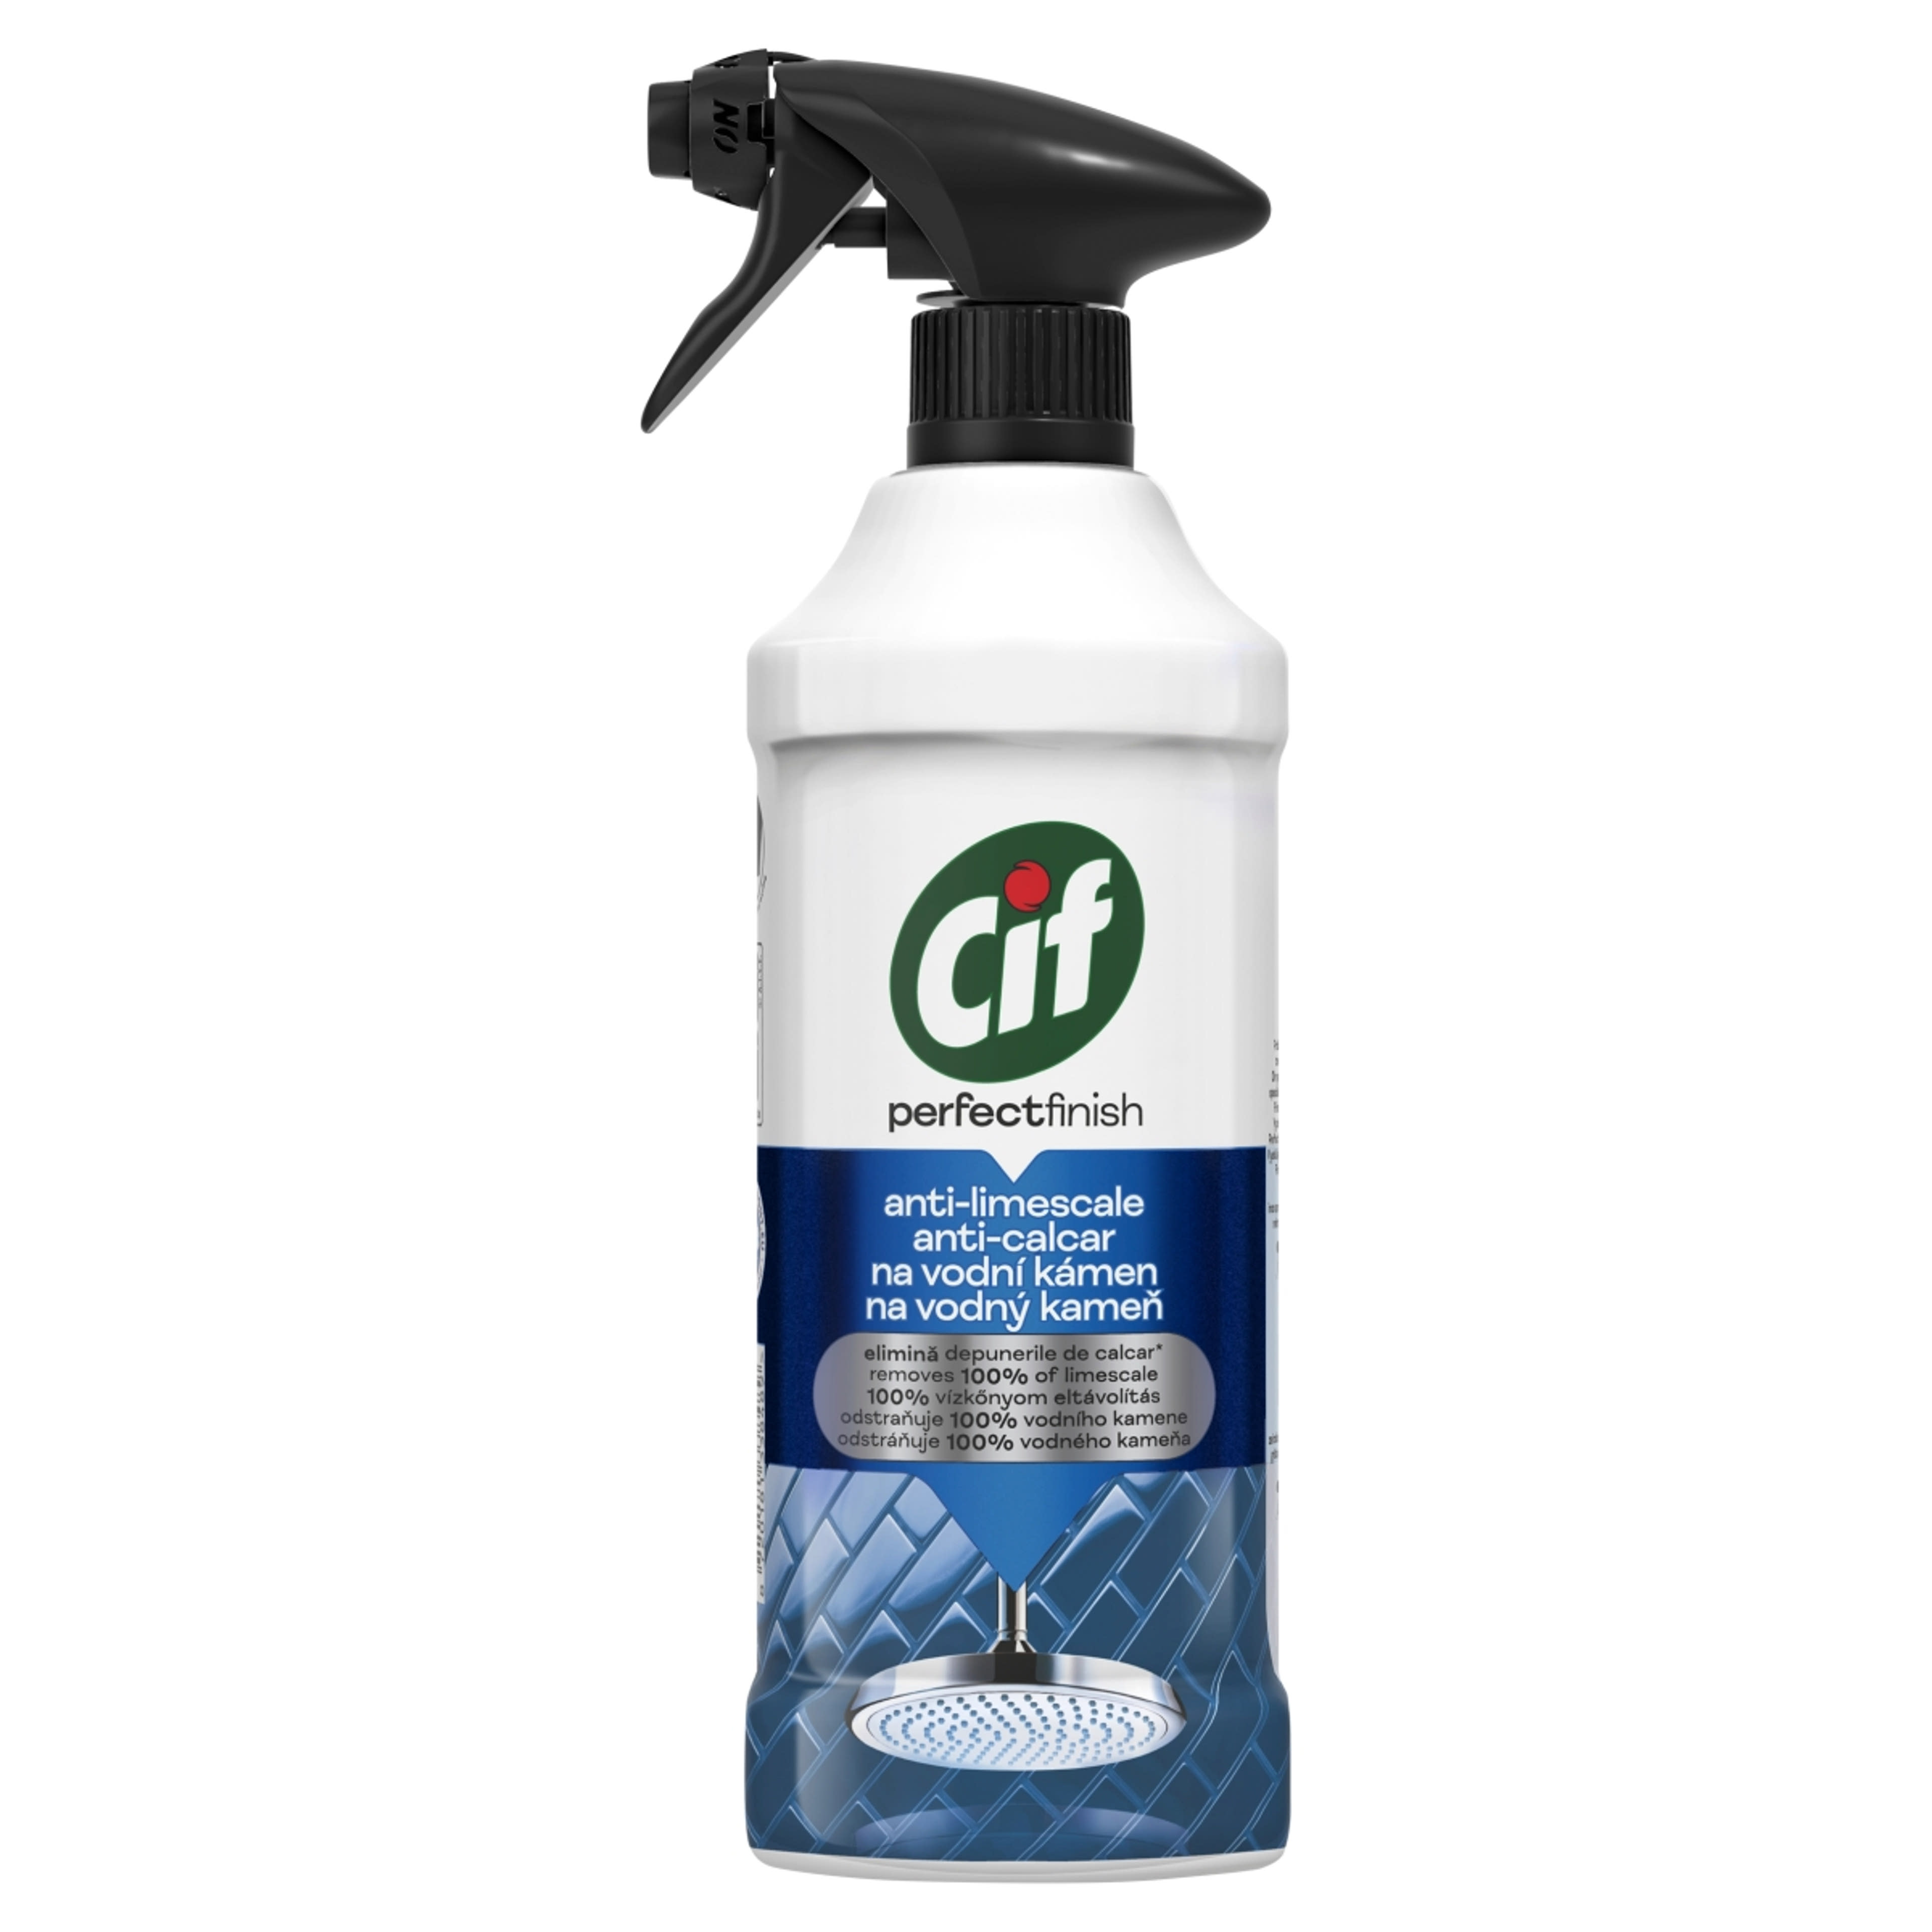 Cif Perfect Finish Vízkőoldó Spray - 435 ml